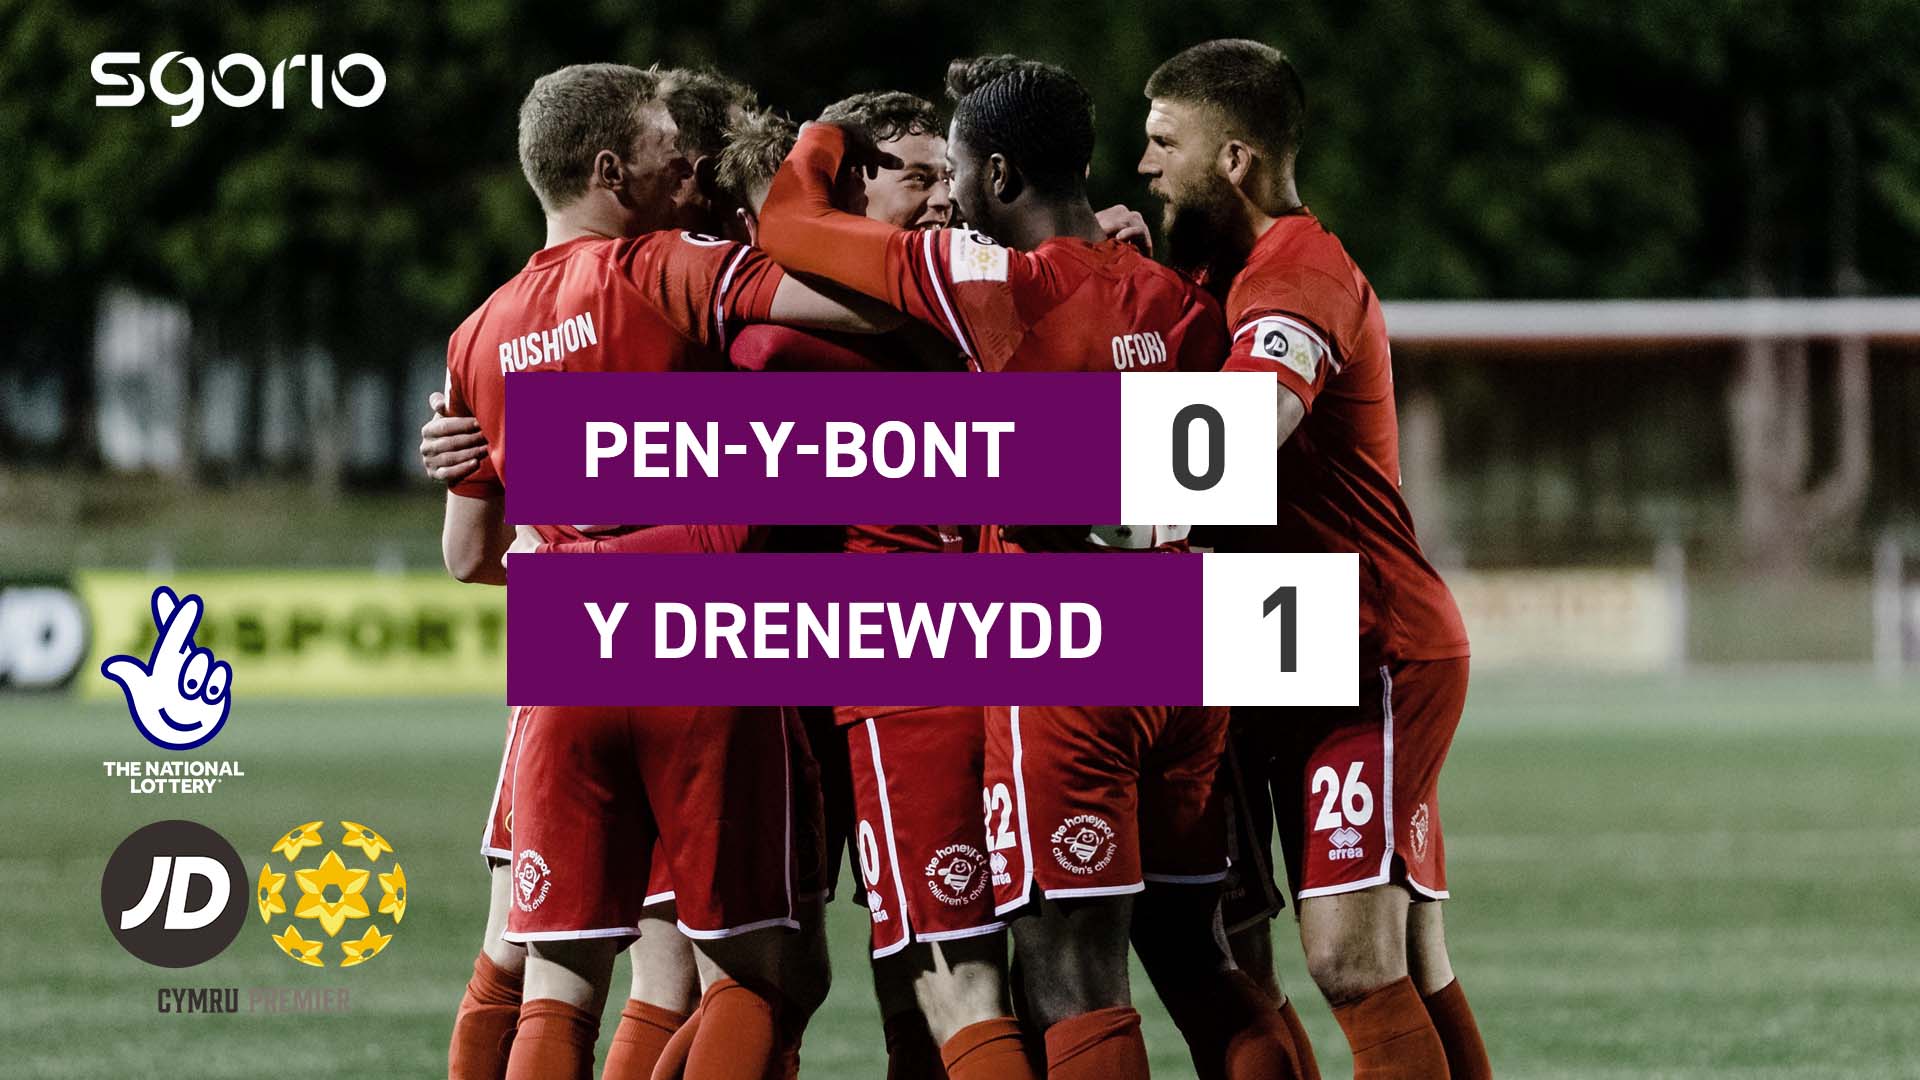 Pen-y-bont 0-1 Y Drenewydd